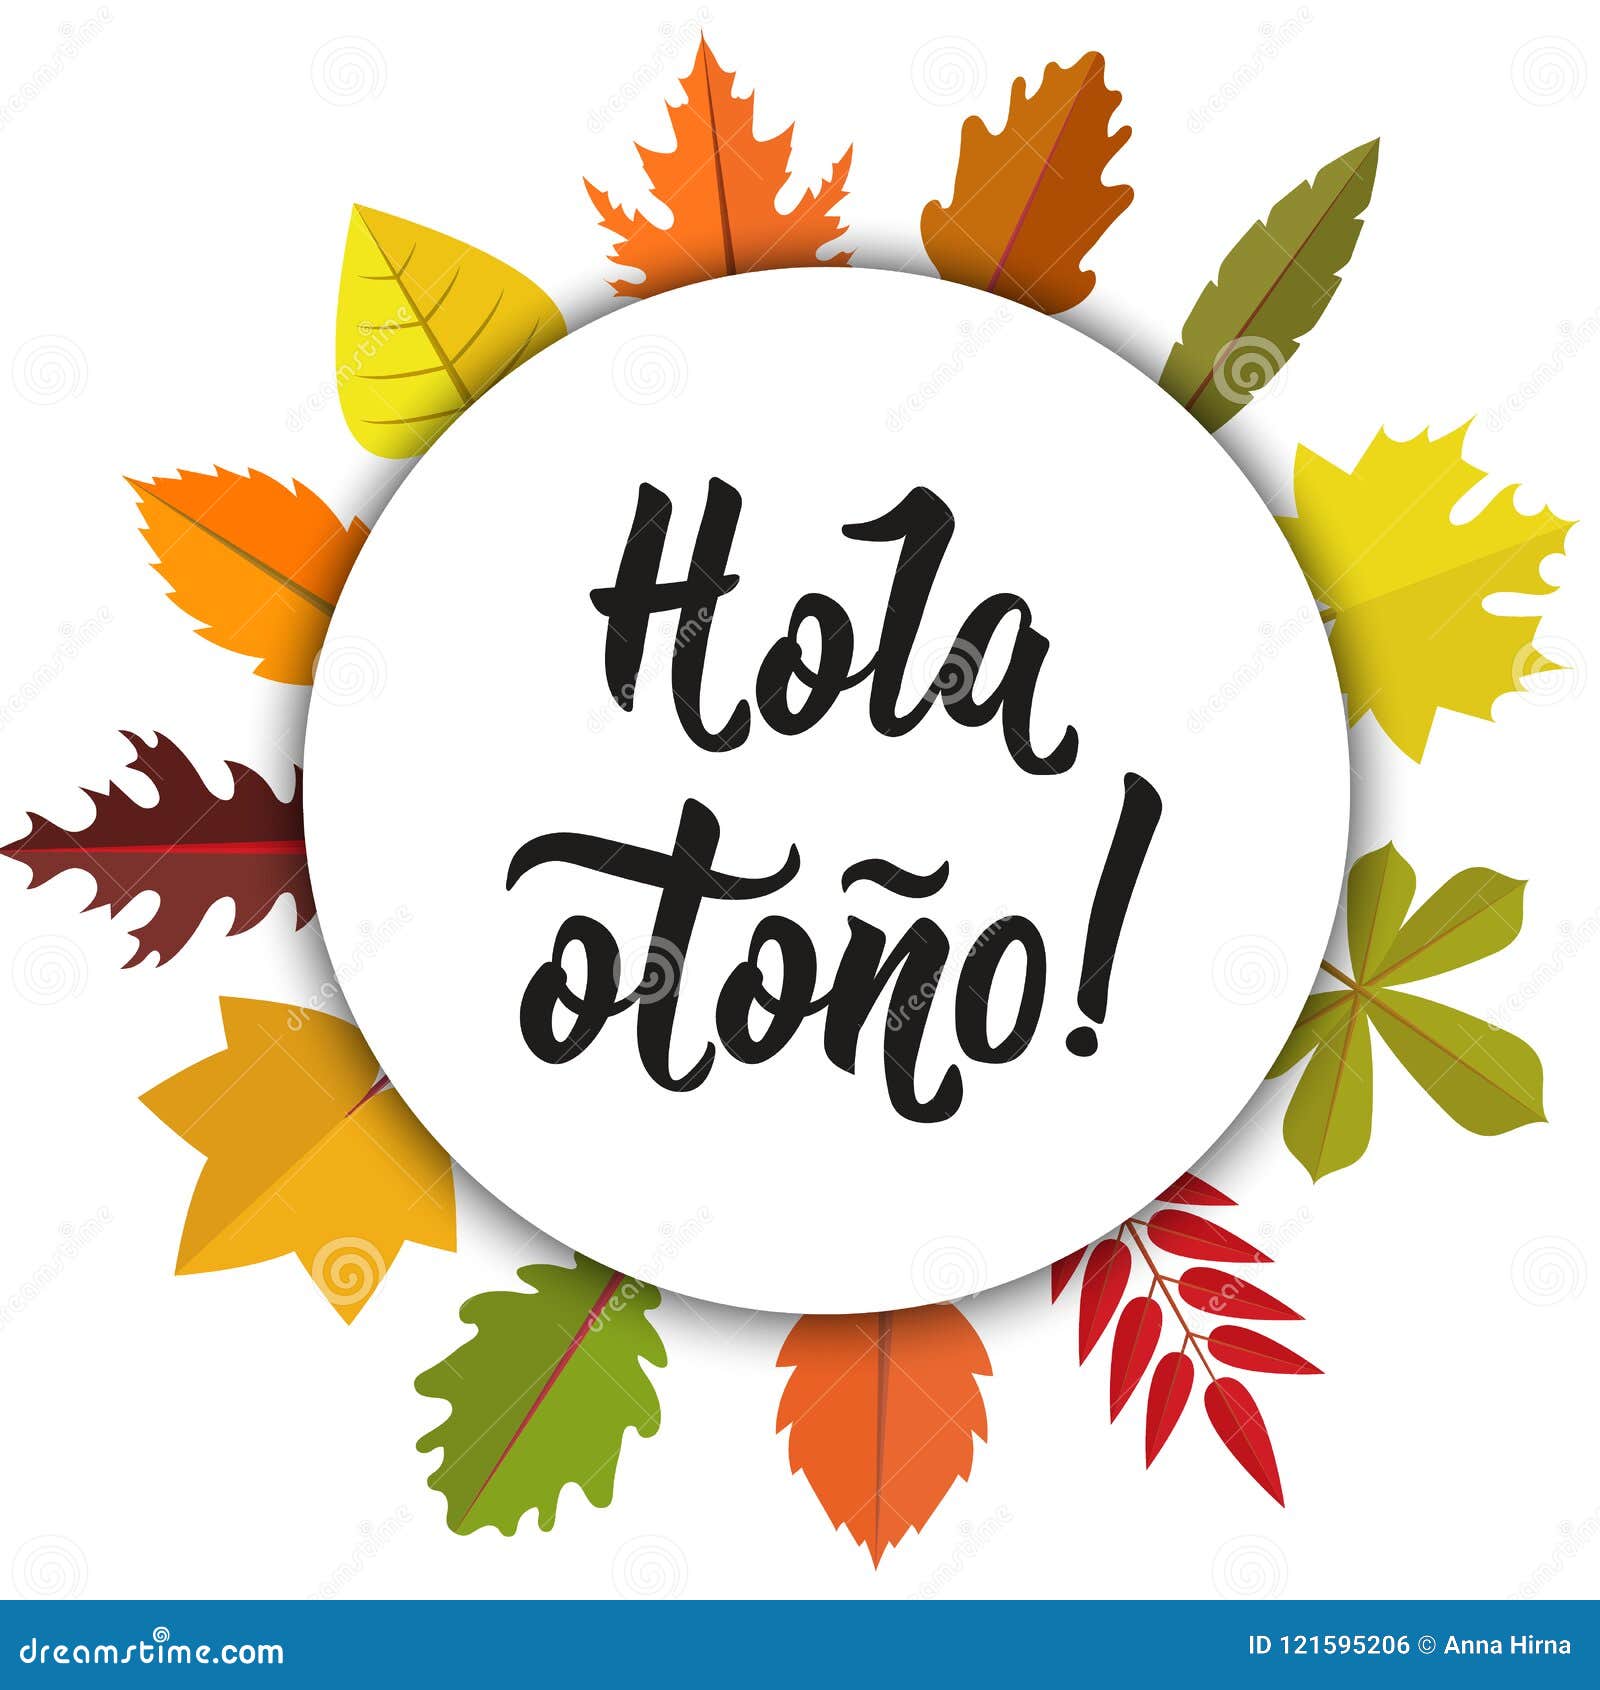 hola otono lettering. spanish translation: hello autumn. calligraphy  .